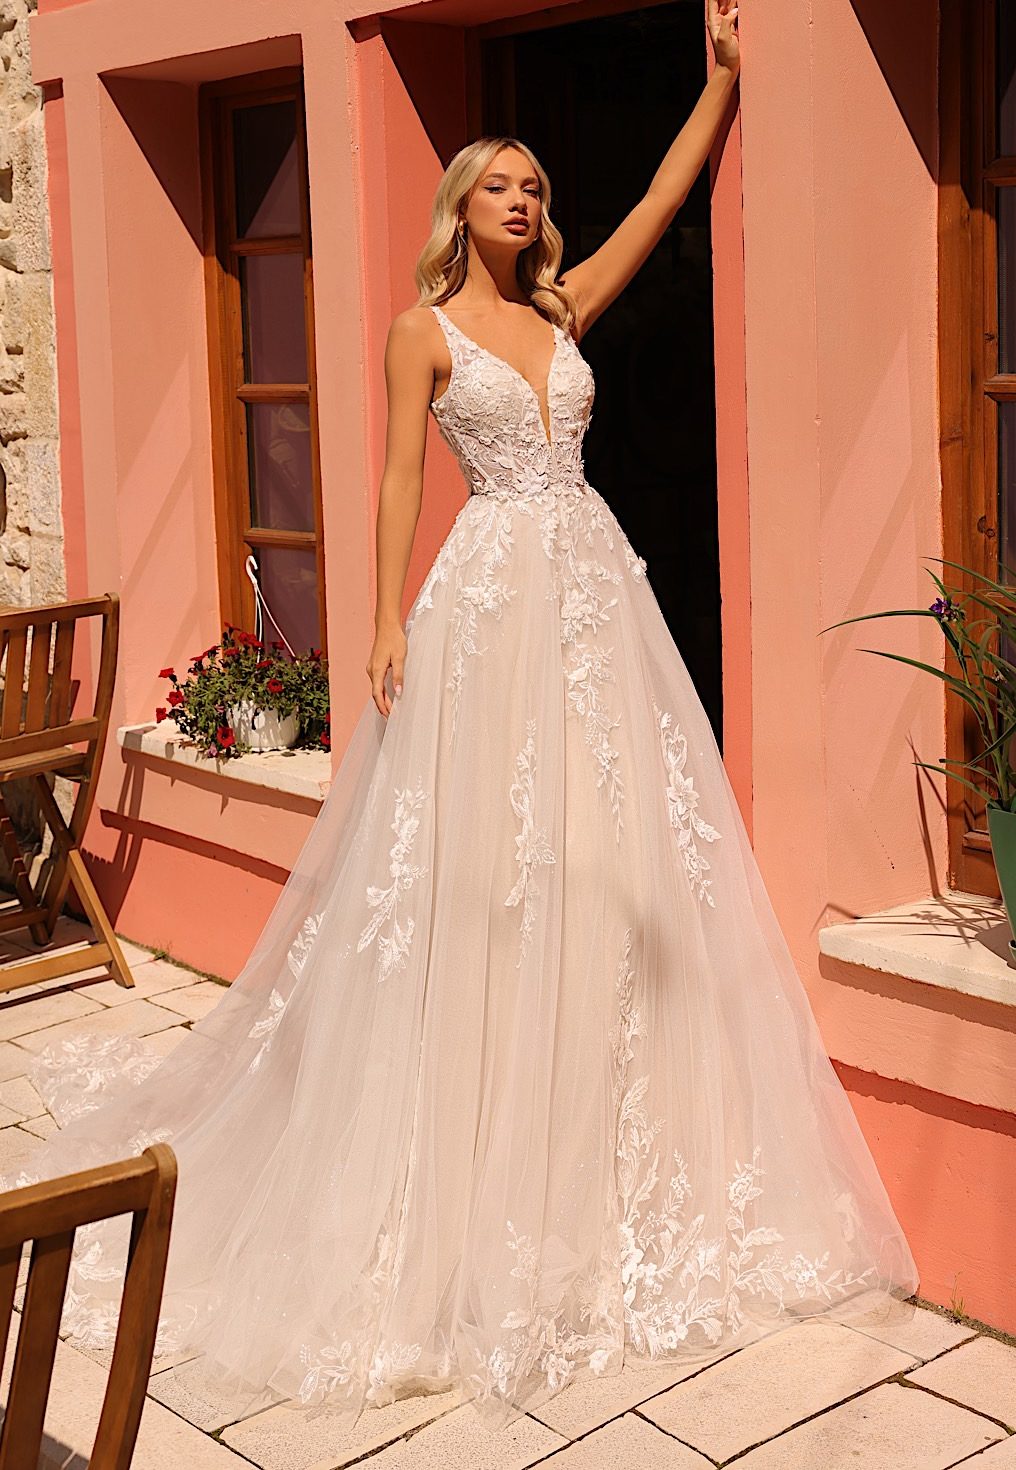 WEDDING DRESS STYLE PAISLEY - The Bridal Company